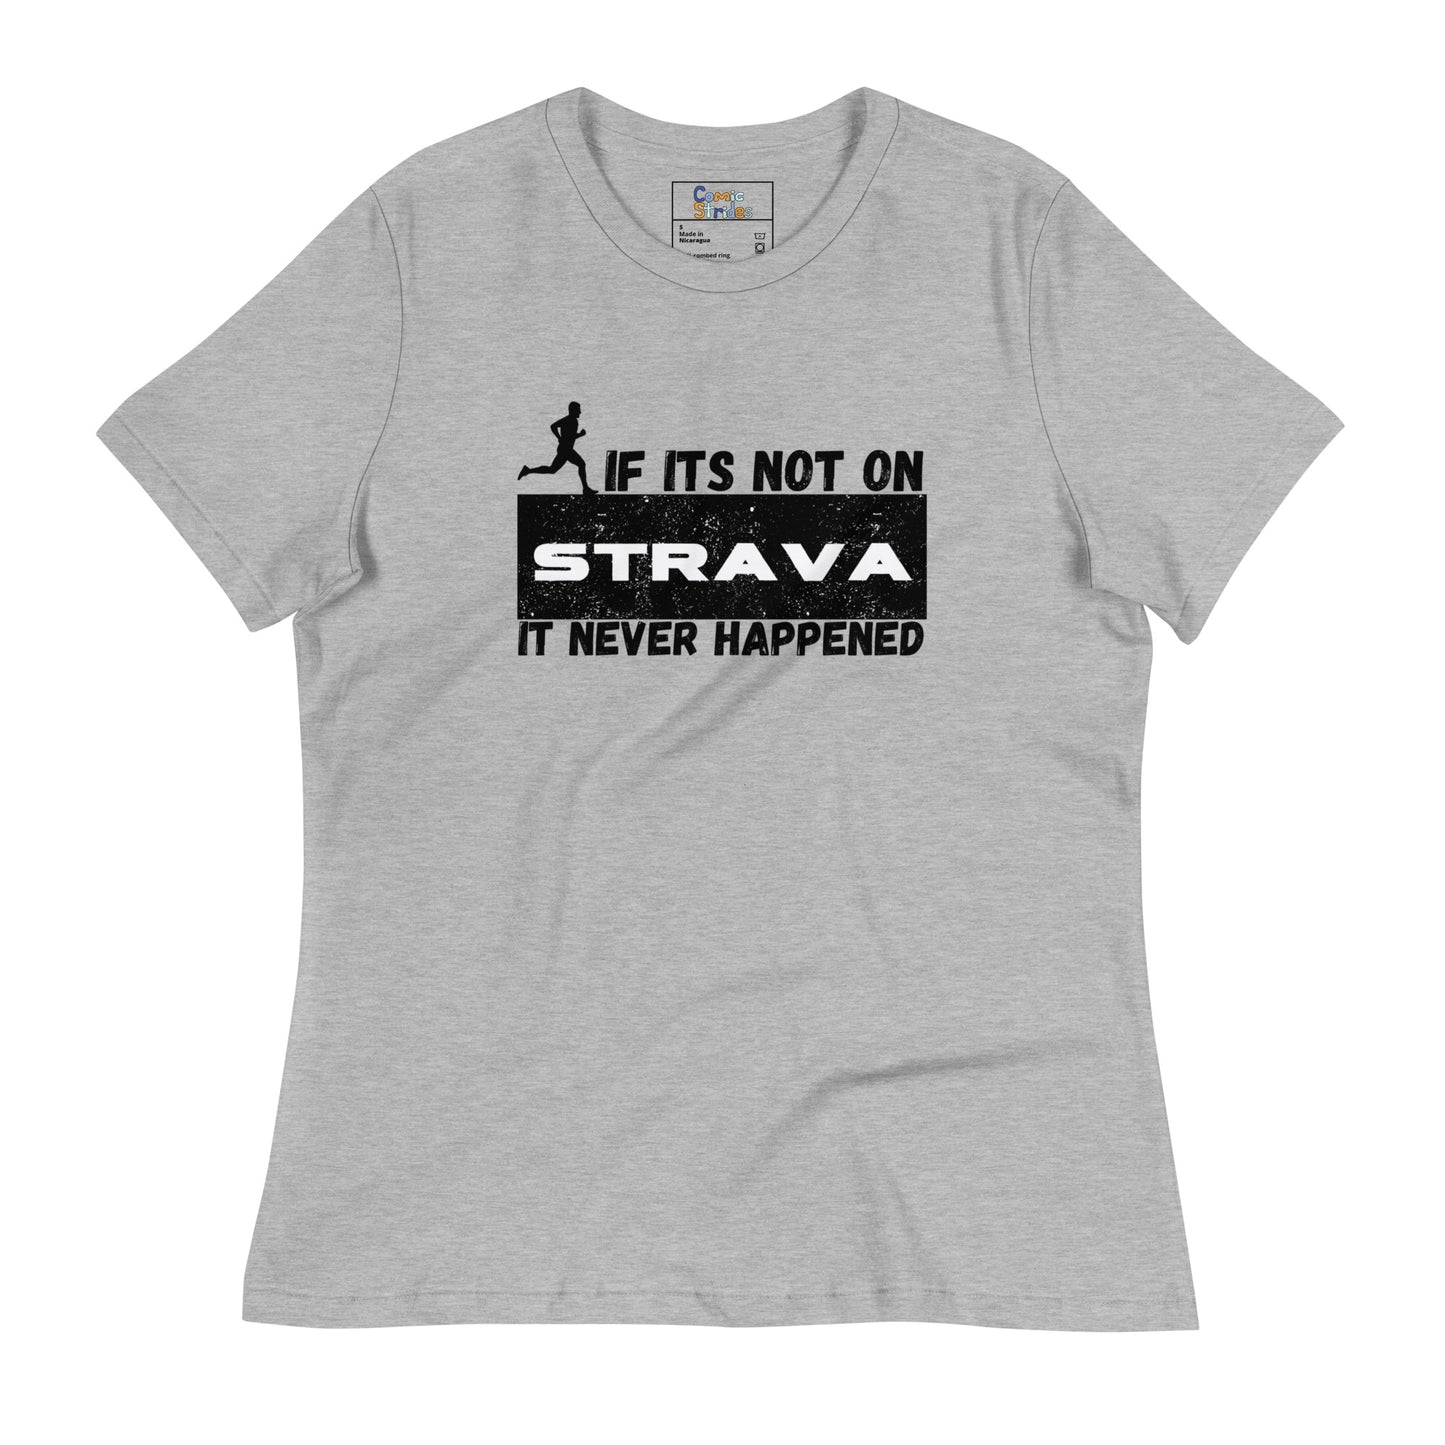 Women's "Strava" T-Shirt